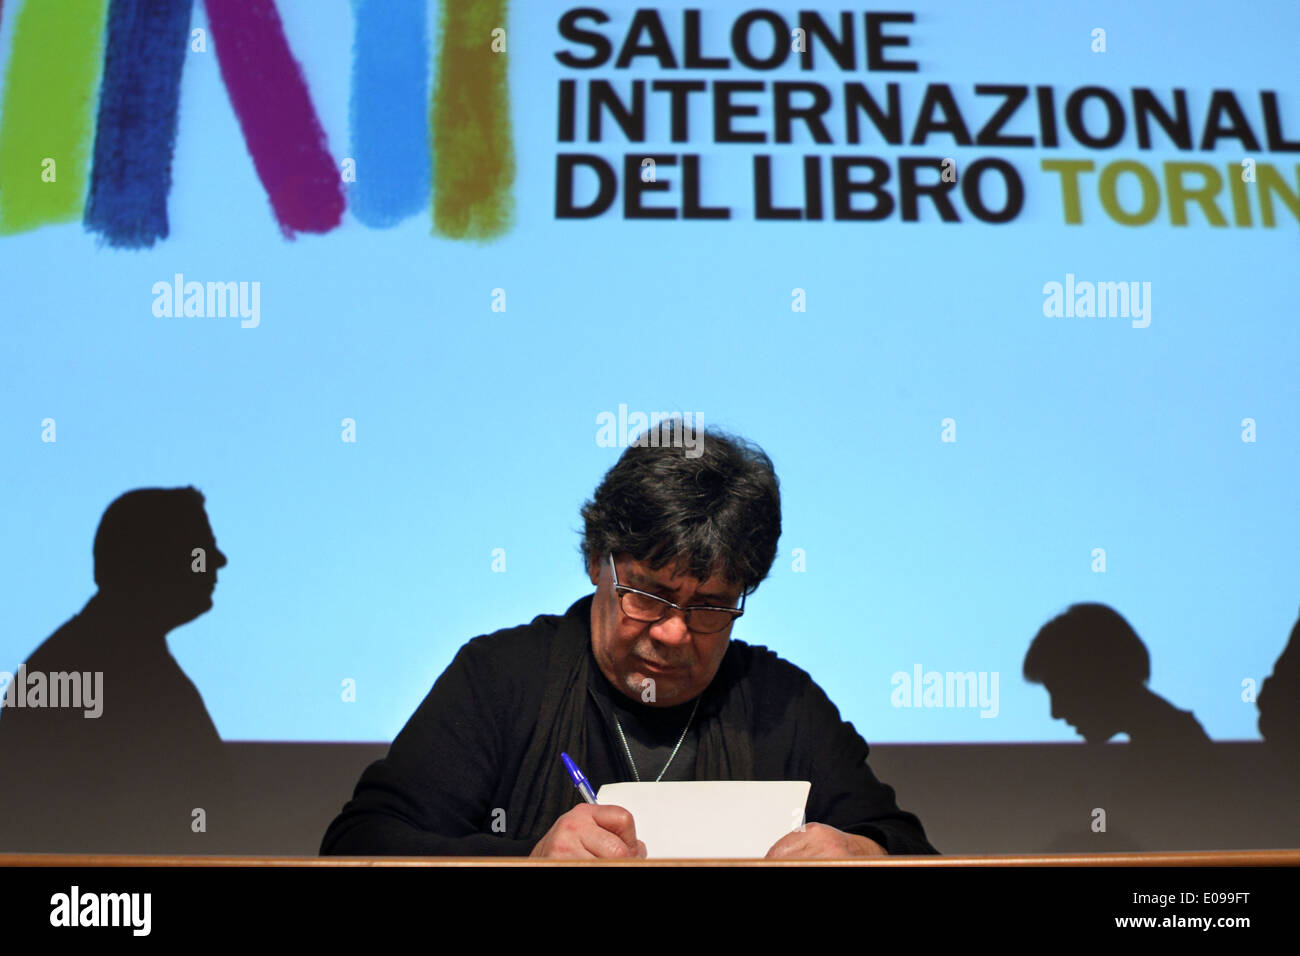 Chilean writer Luis Sepulveda (born in 1949) signing autographs at 2013 Torino Book Fair. Stock Photo